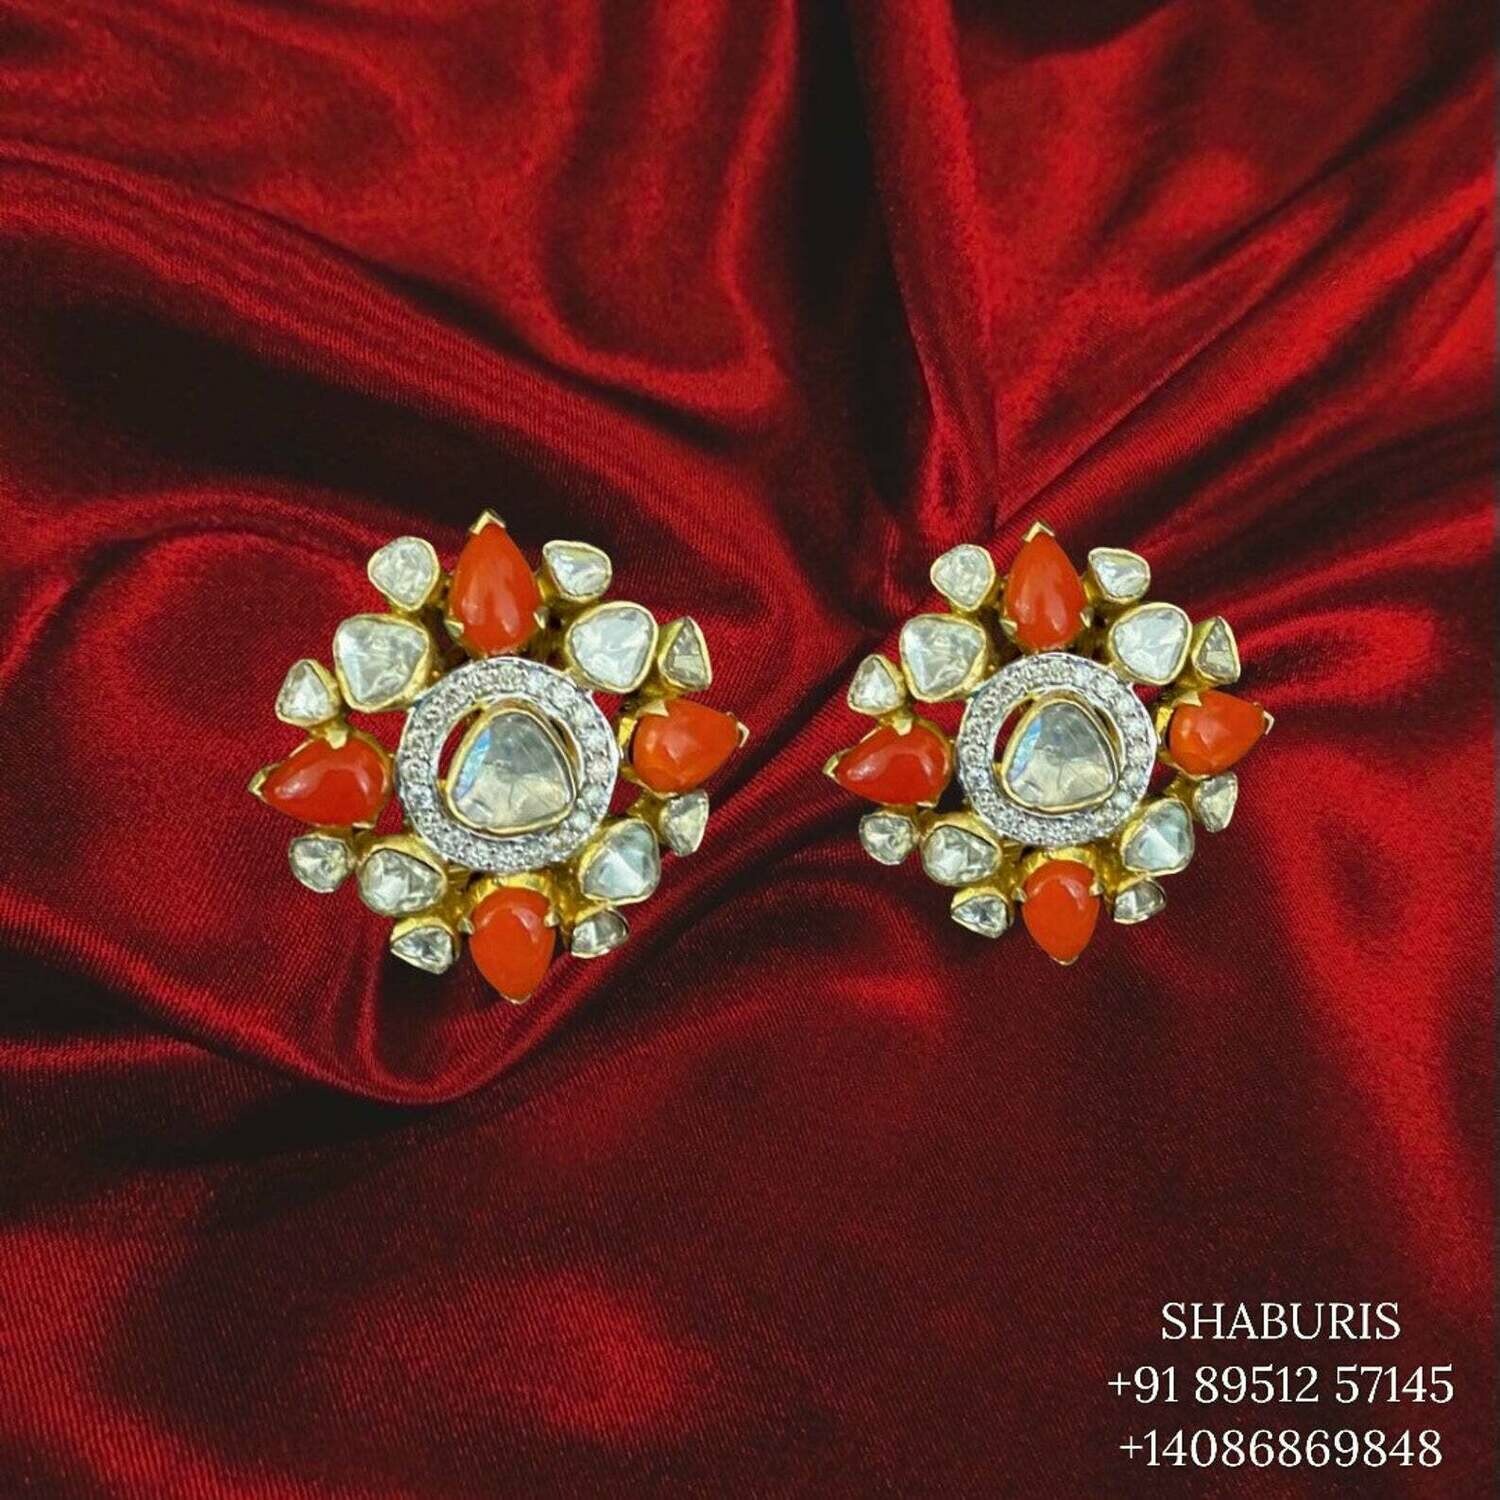 Coral jewelry,Swarovski Diamond Jhumka Jewelry Designs,South Indian Jewelry,Jhumka Earrings,Jhumki,latest indian jewellery Designs -NIHIRA